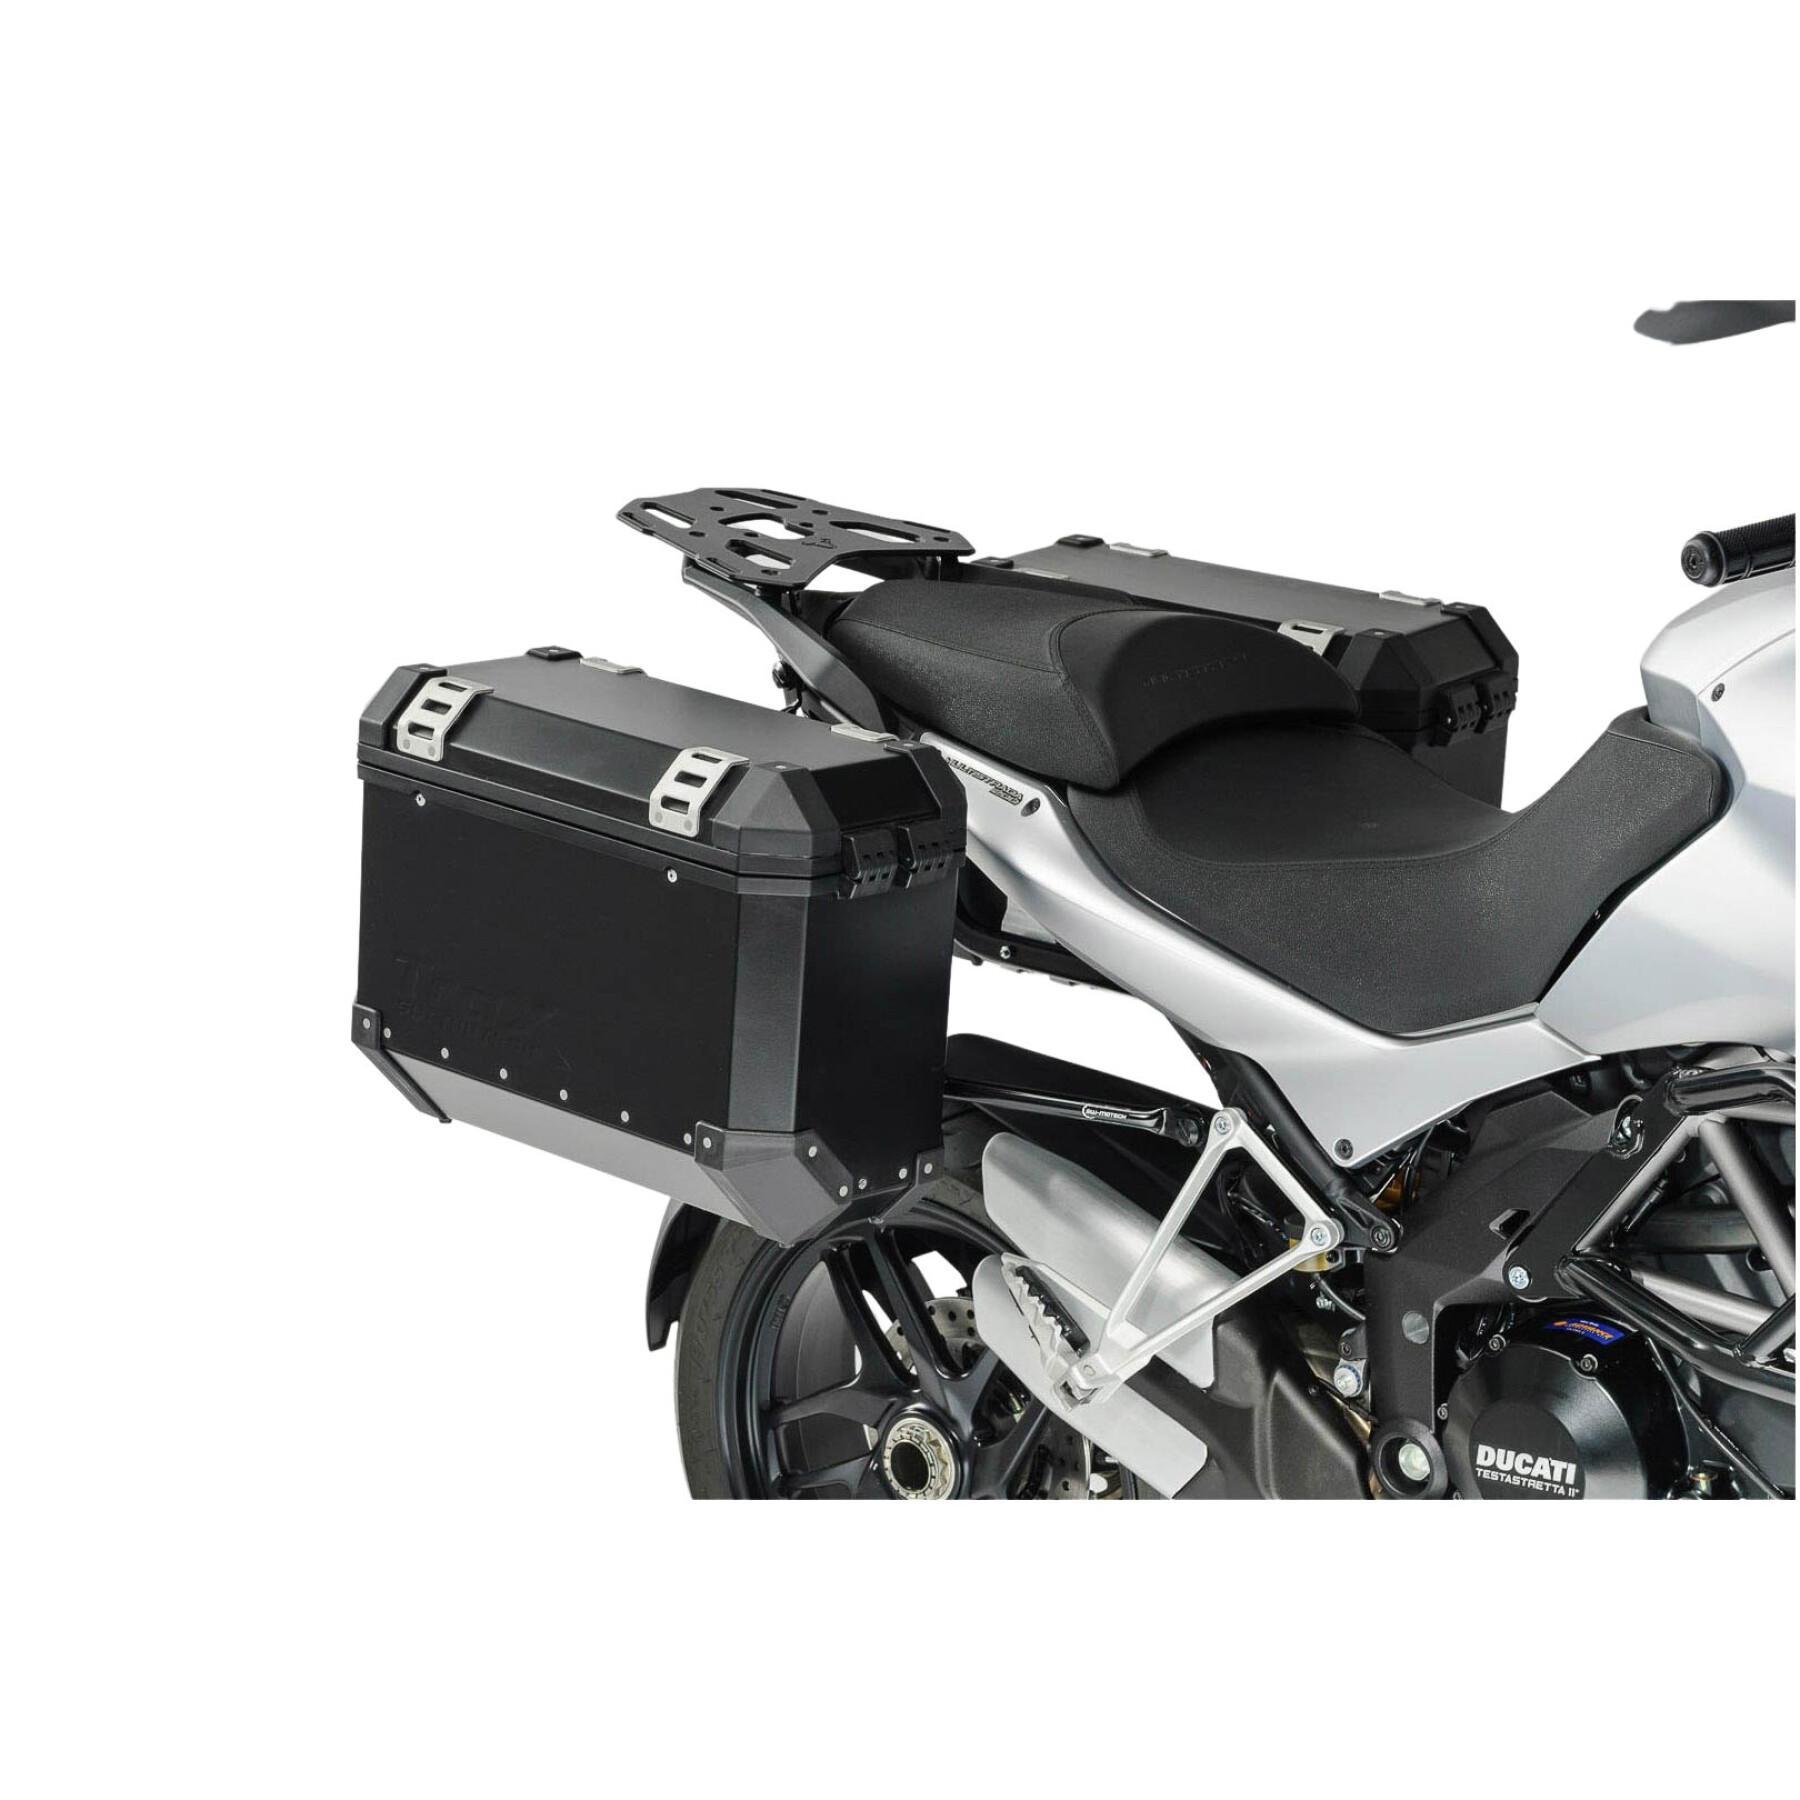 Motorcycle side case support Sw-Motech Evo. Ducati Multistrada 1200 / S (10-14)